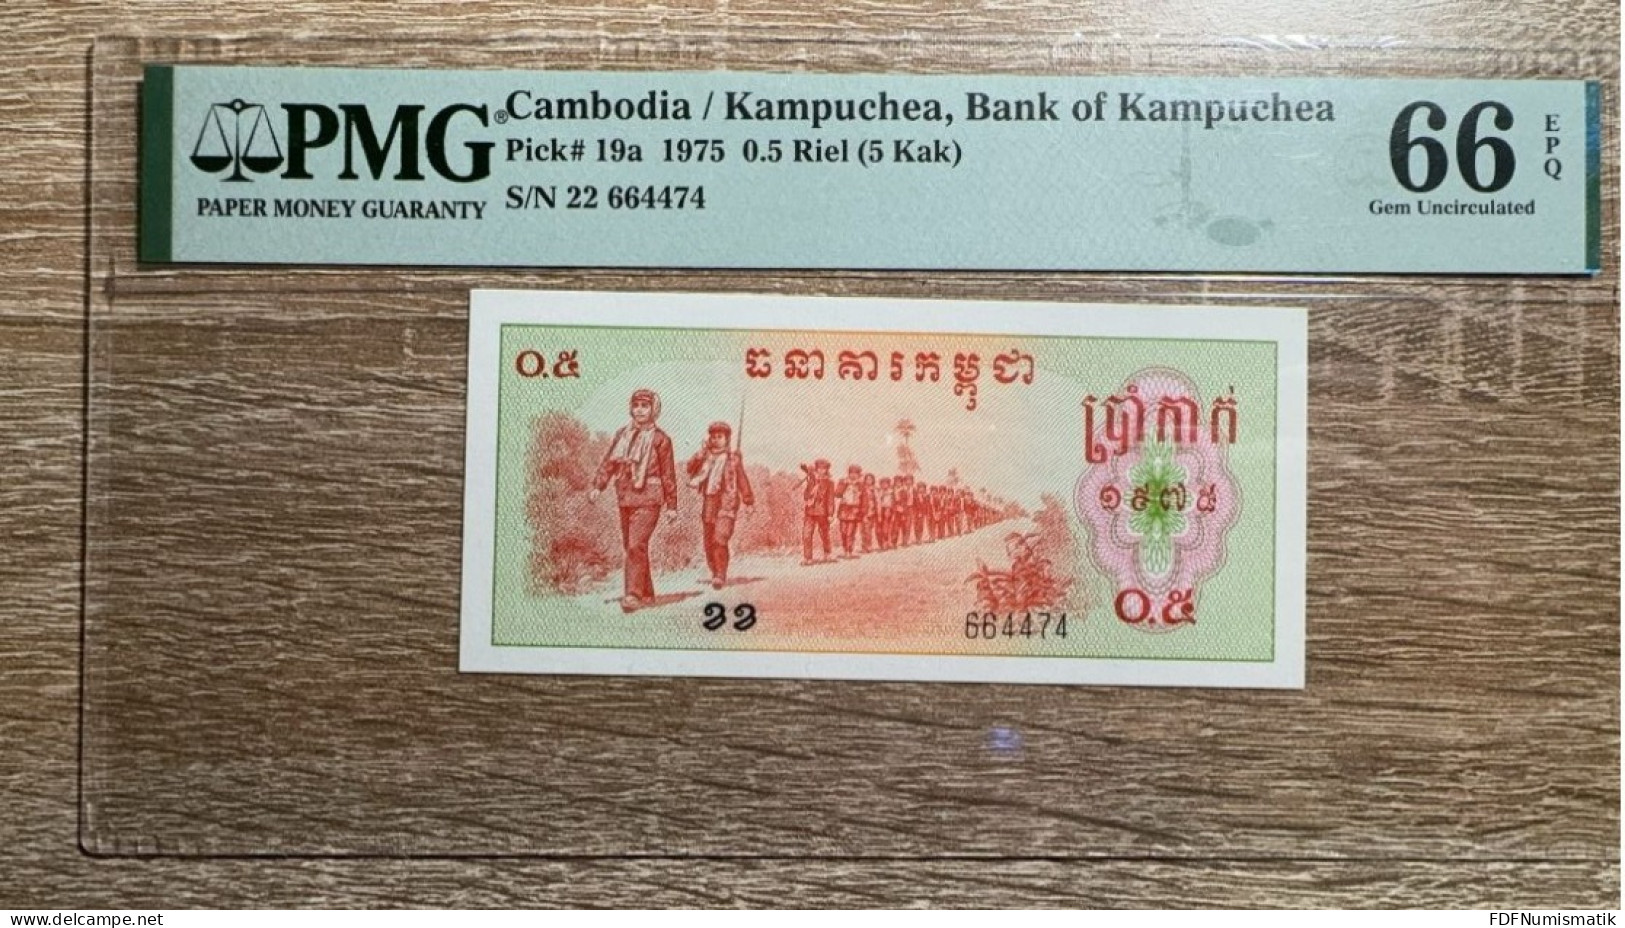 Cambodia//Kampuchea， 0.5 Riel（5 Kak），pick19a，1975，PMG 66 High Grade，rare - Yougoslavie